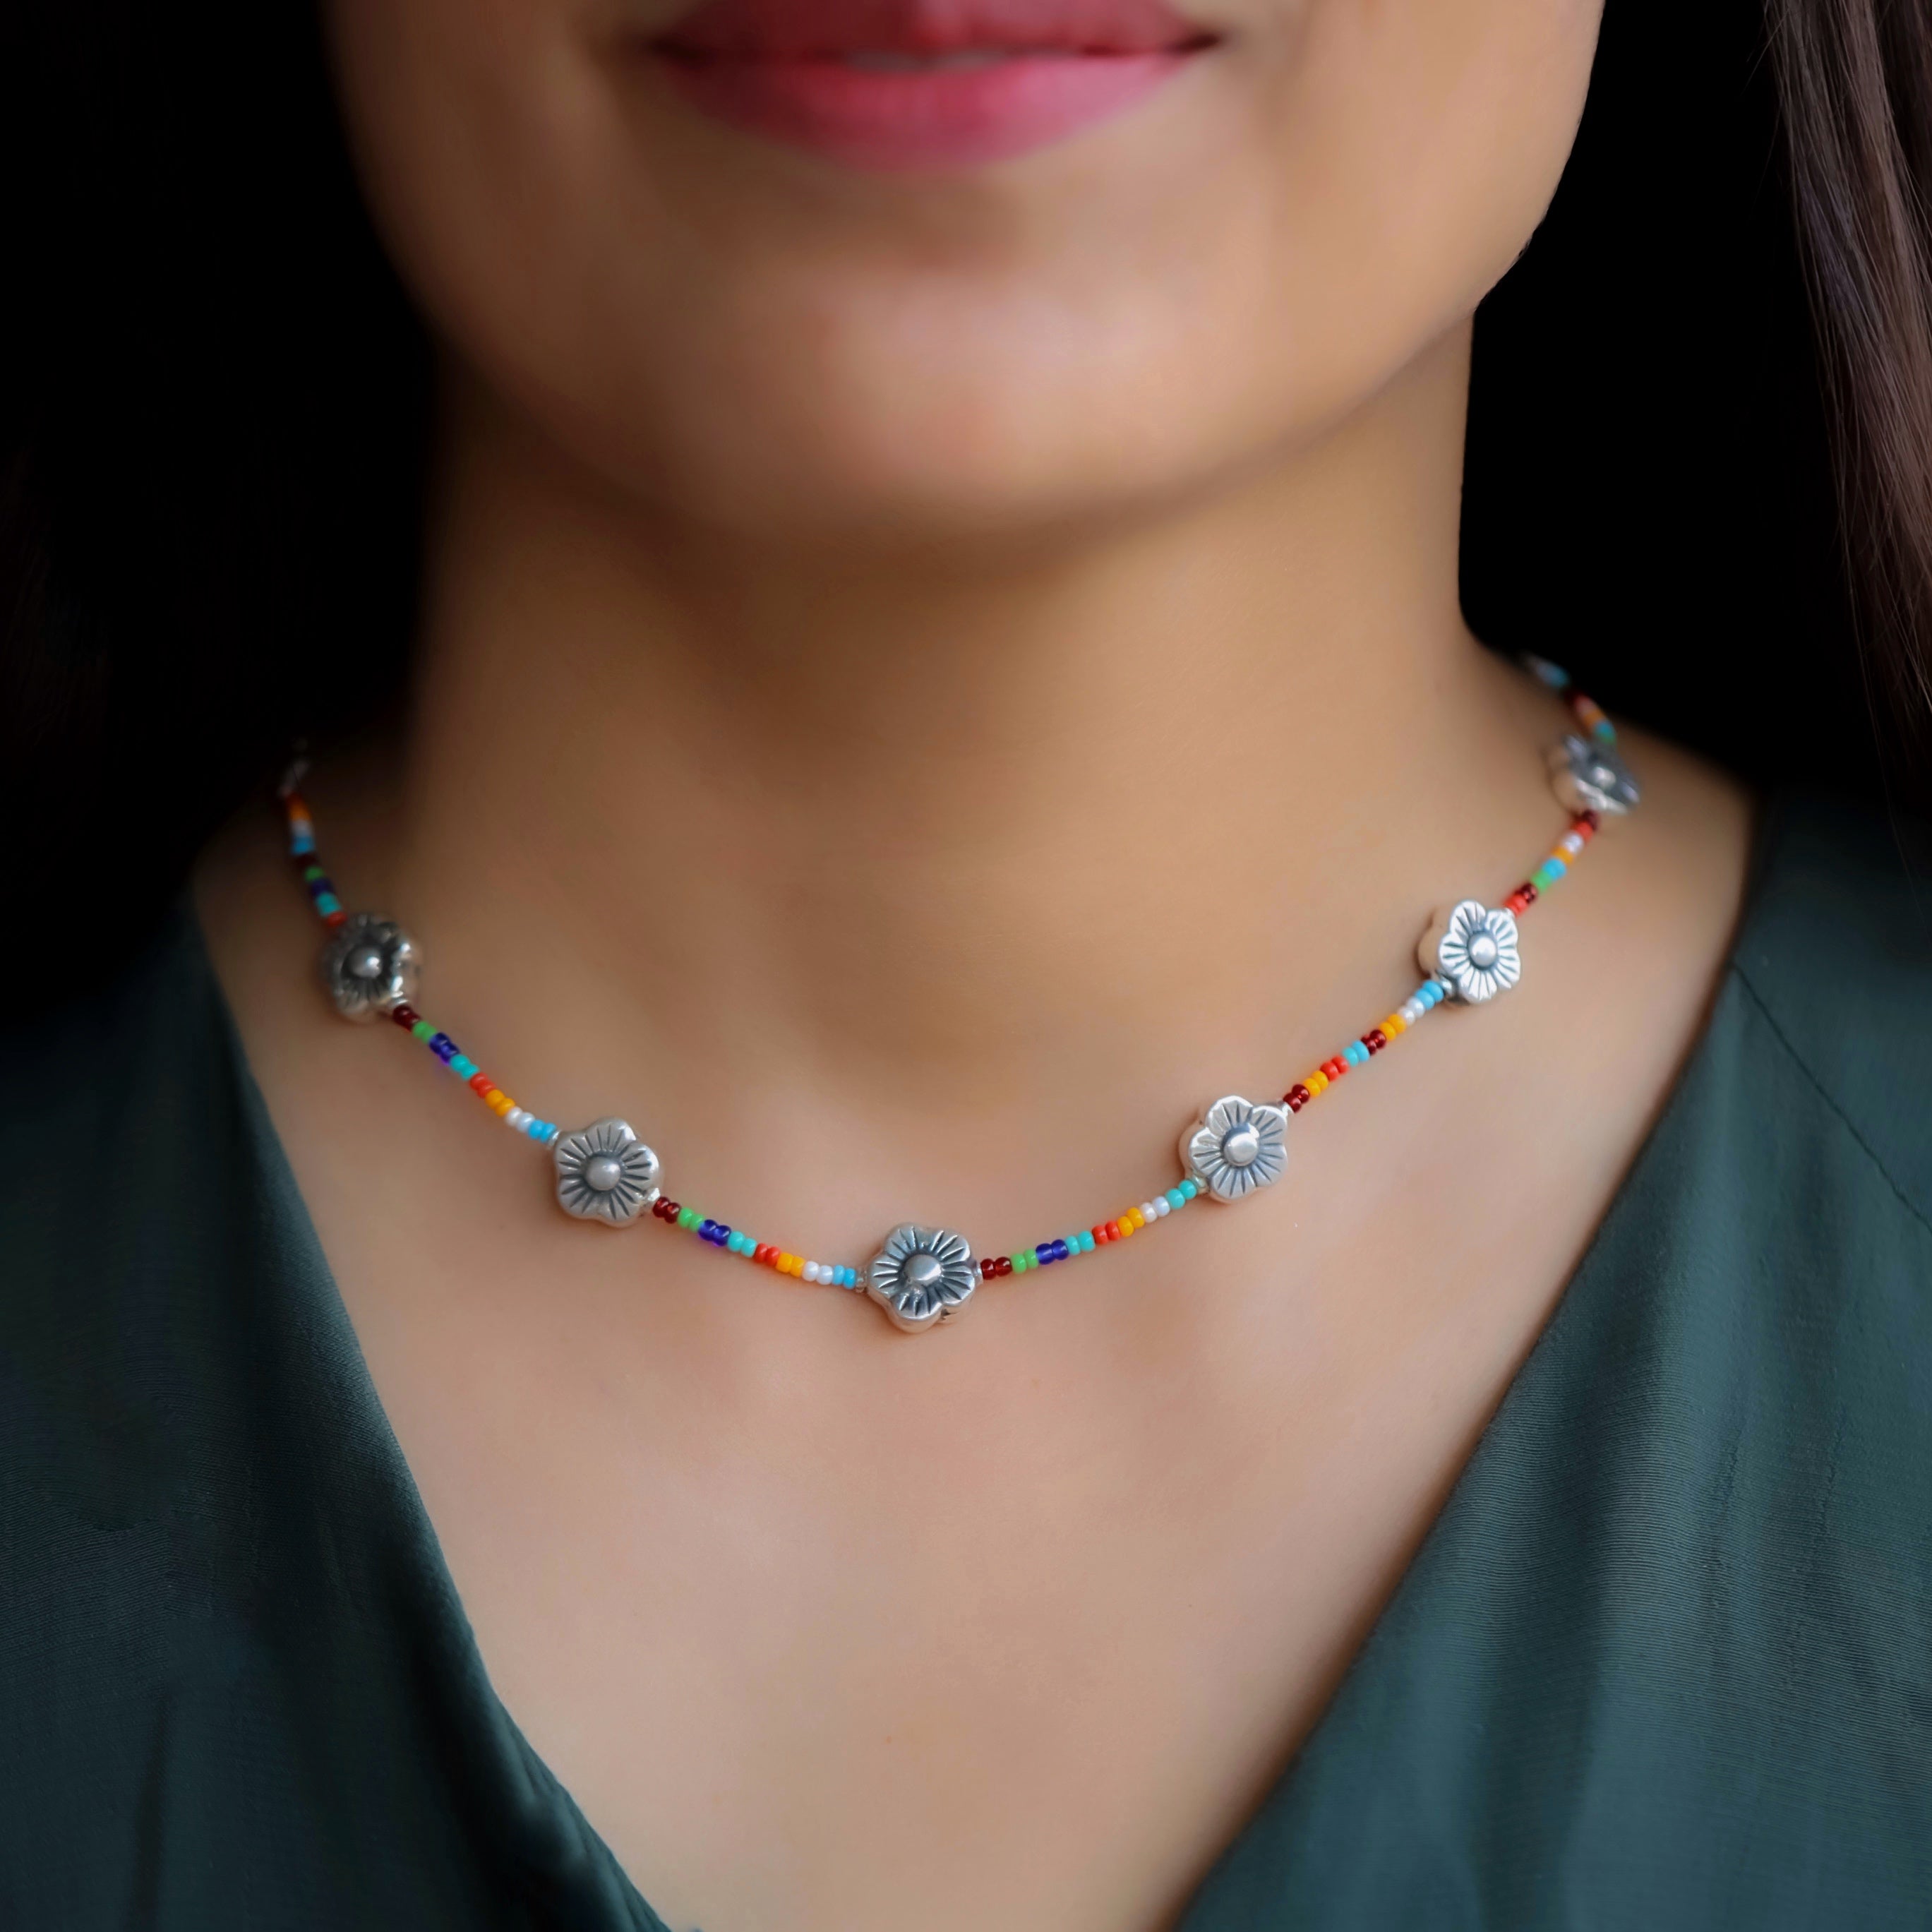 Handmade Daisy Chain Beaded Necklace,flower Beads, Seed Bead Necklace  Each$13.49 | eBay